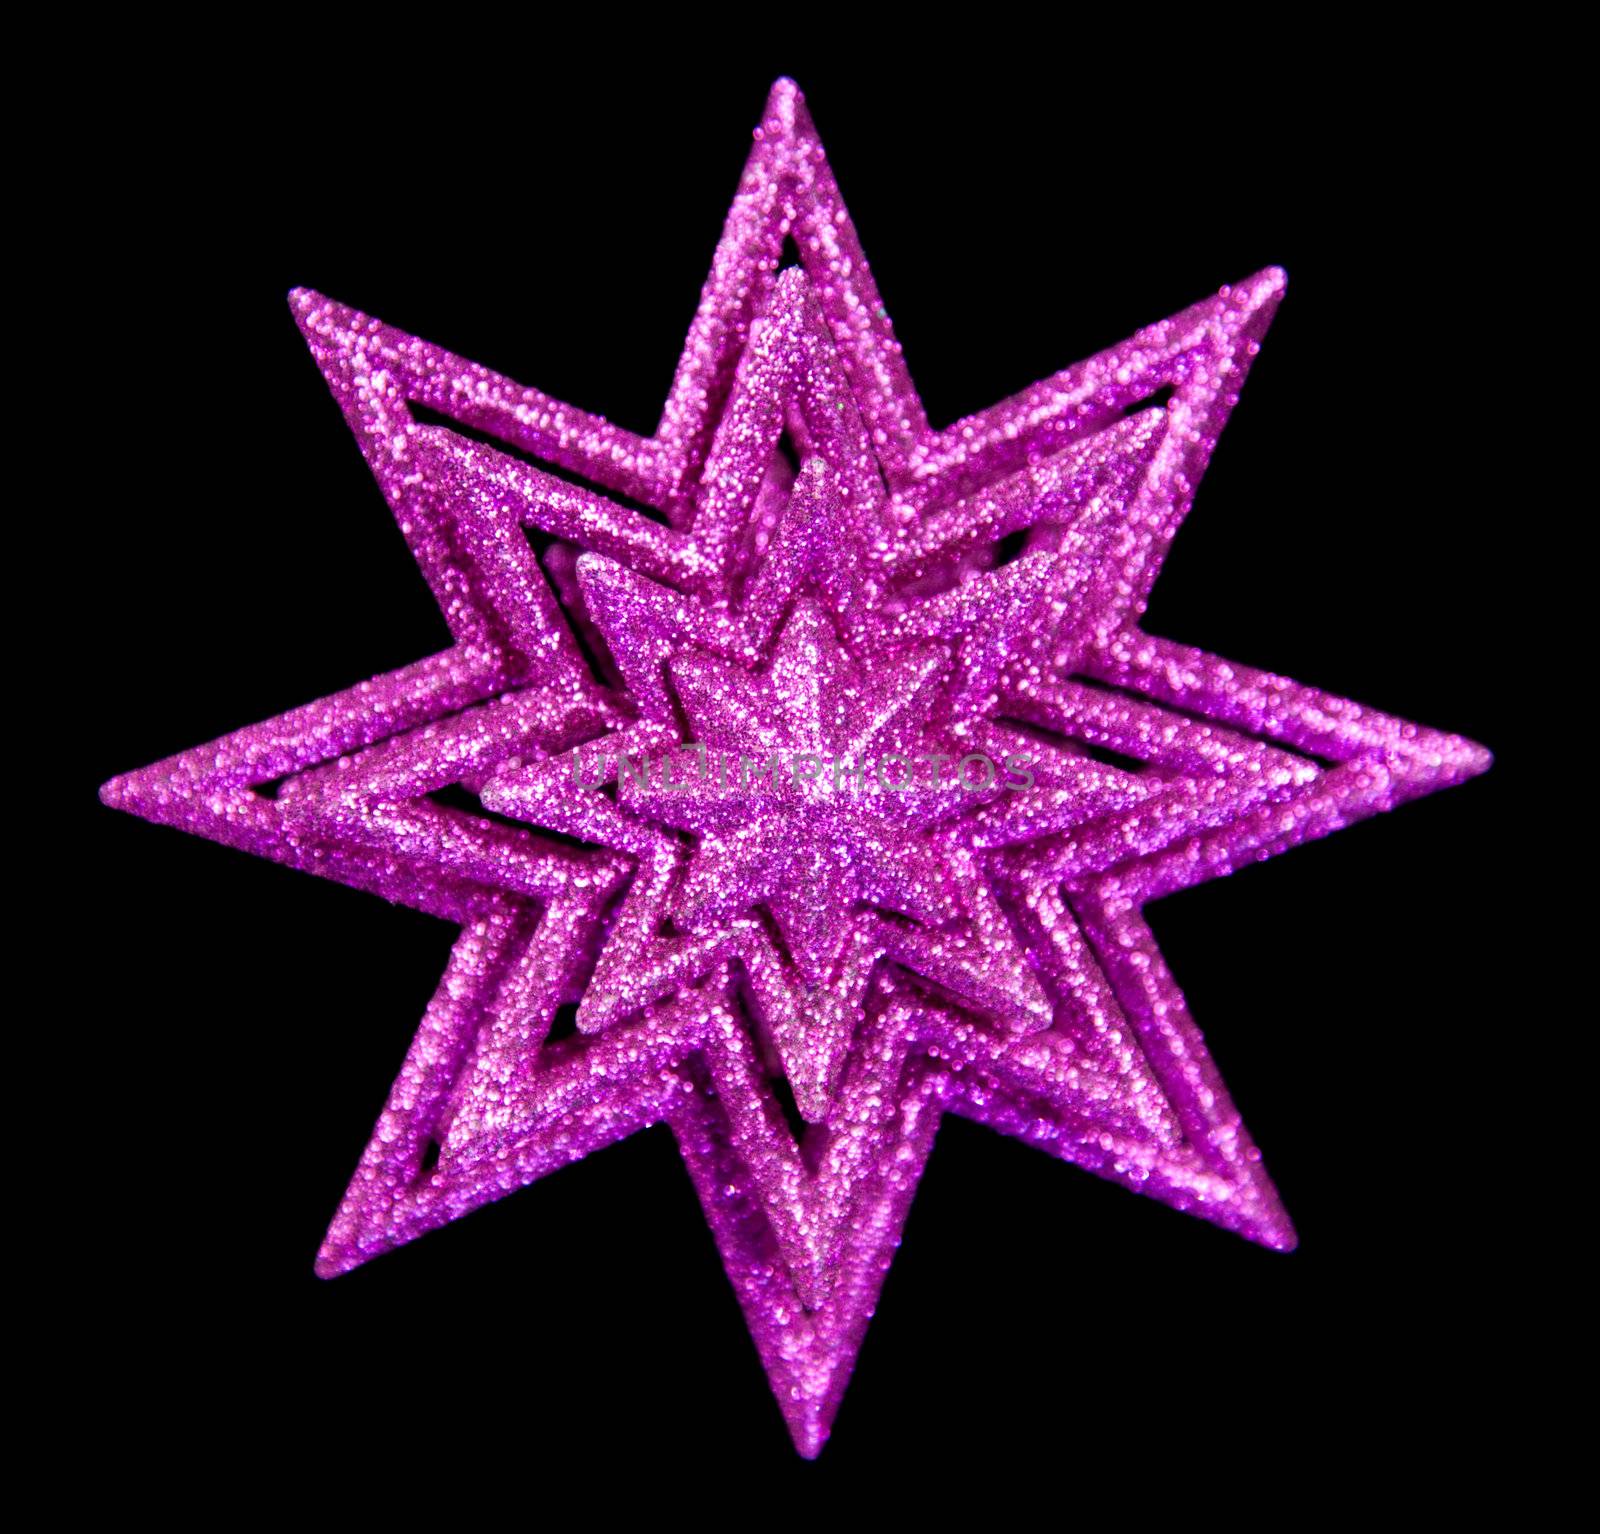 Purple Christmas Star against black by monkeystock